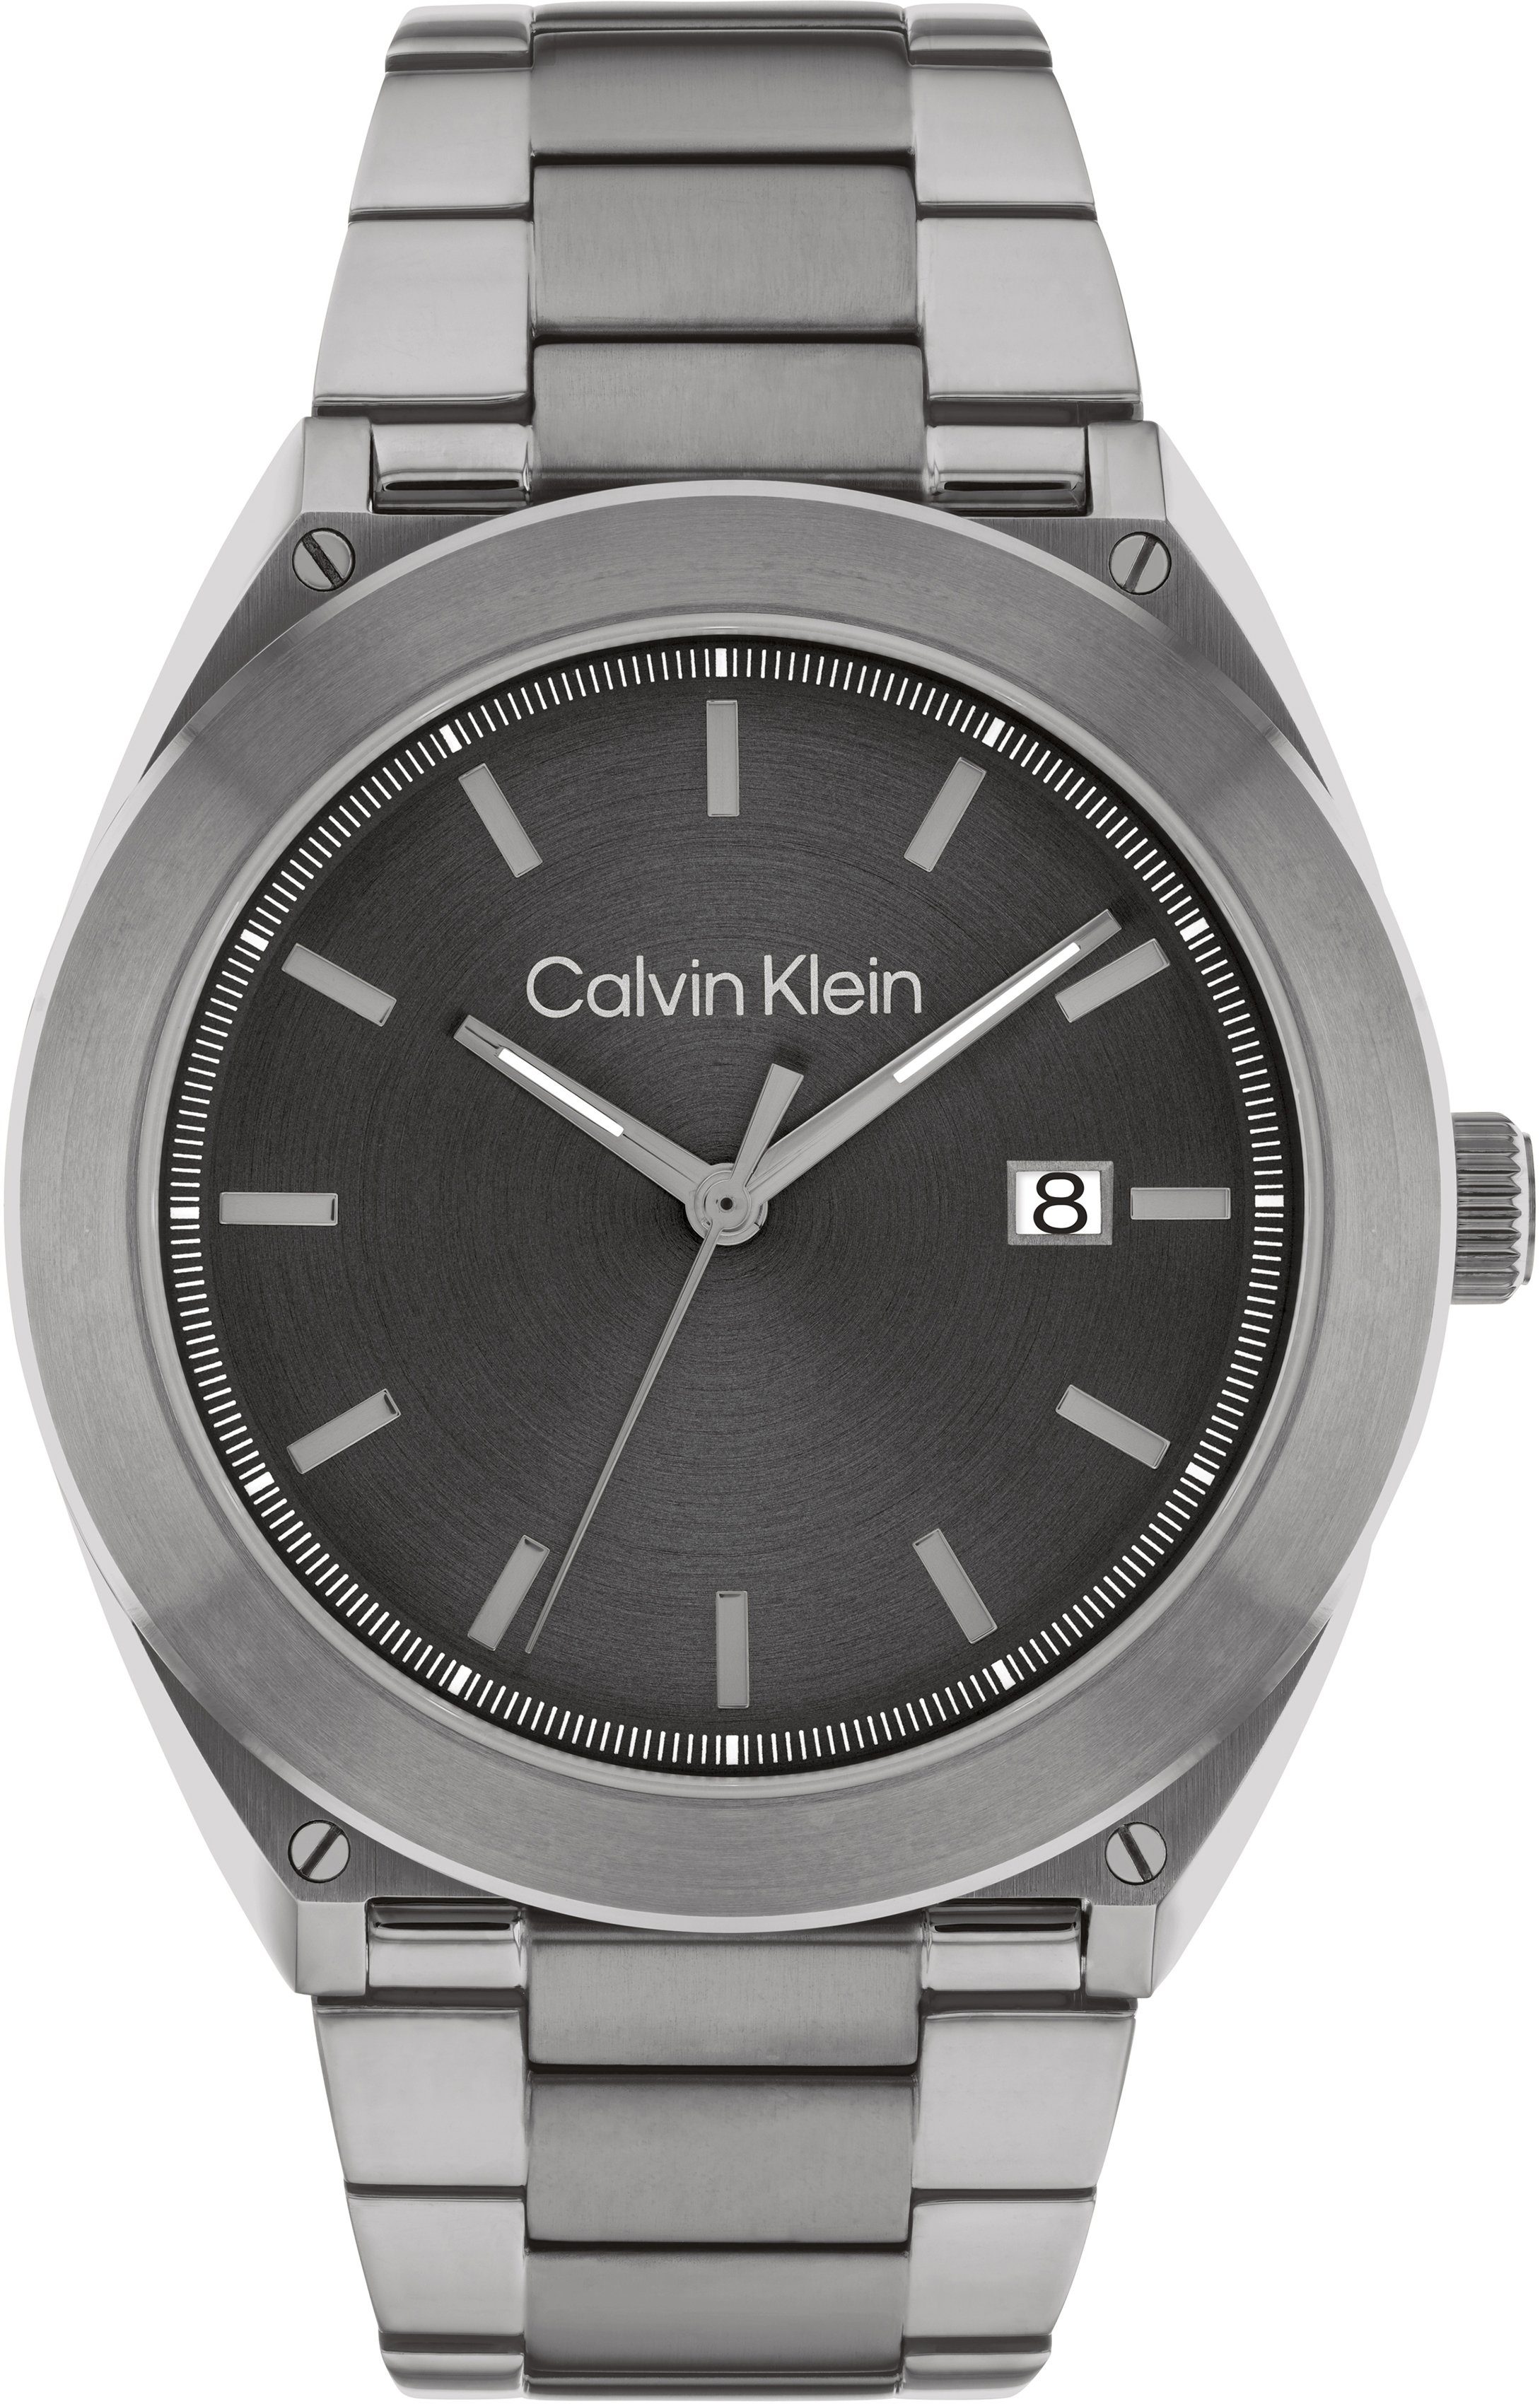 Calvin Klein Quarzuhr CASUAL ESSENTIALS, 25200197, Armbanduhr, Herrenuhr, Datum, Mineralglas, IP-Beschichtung